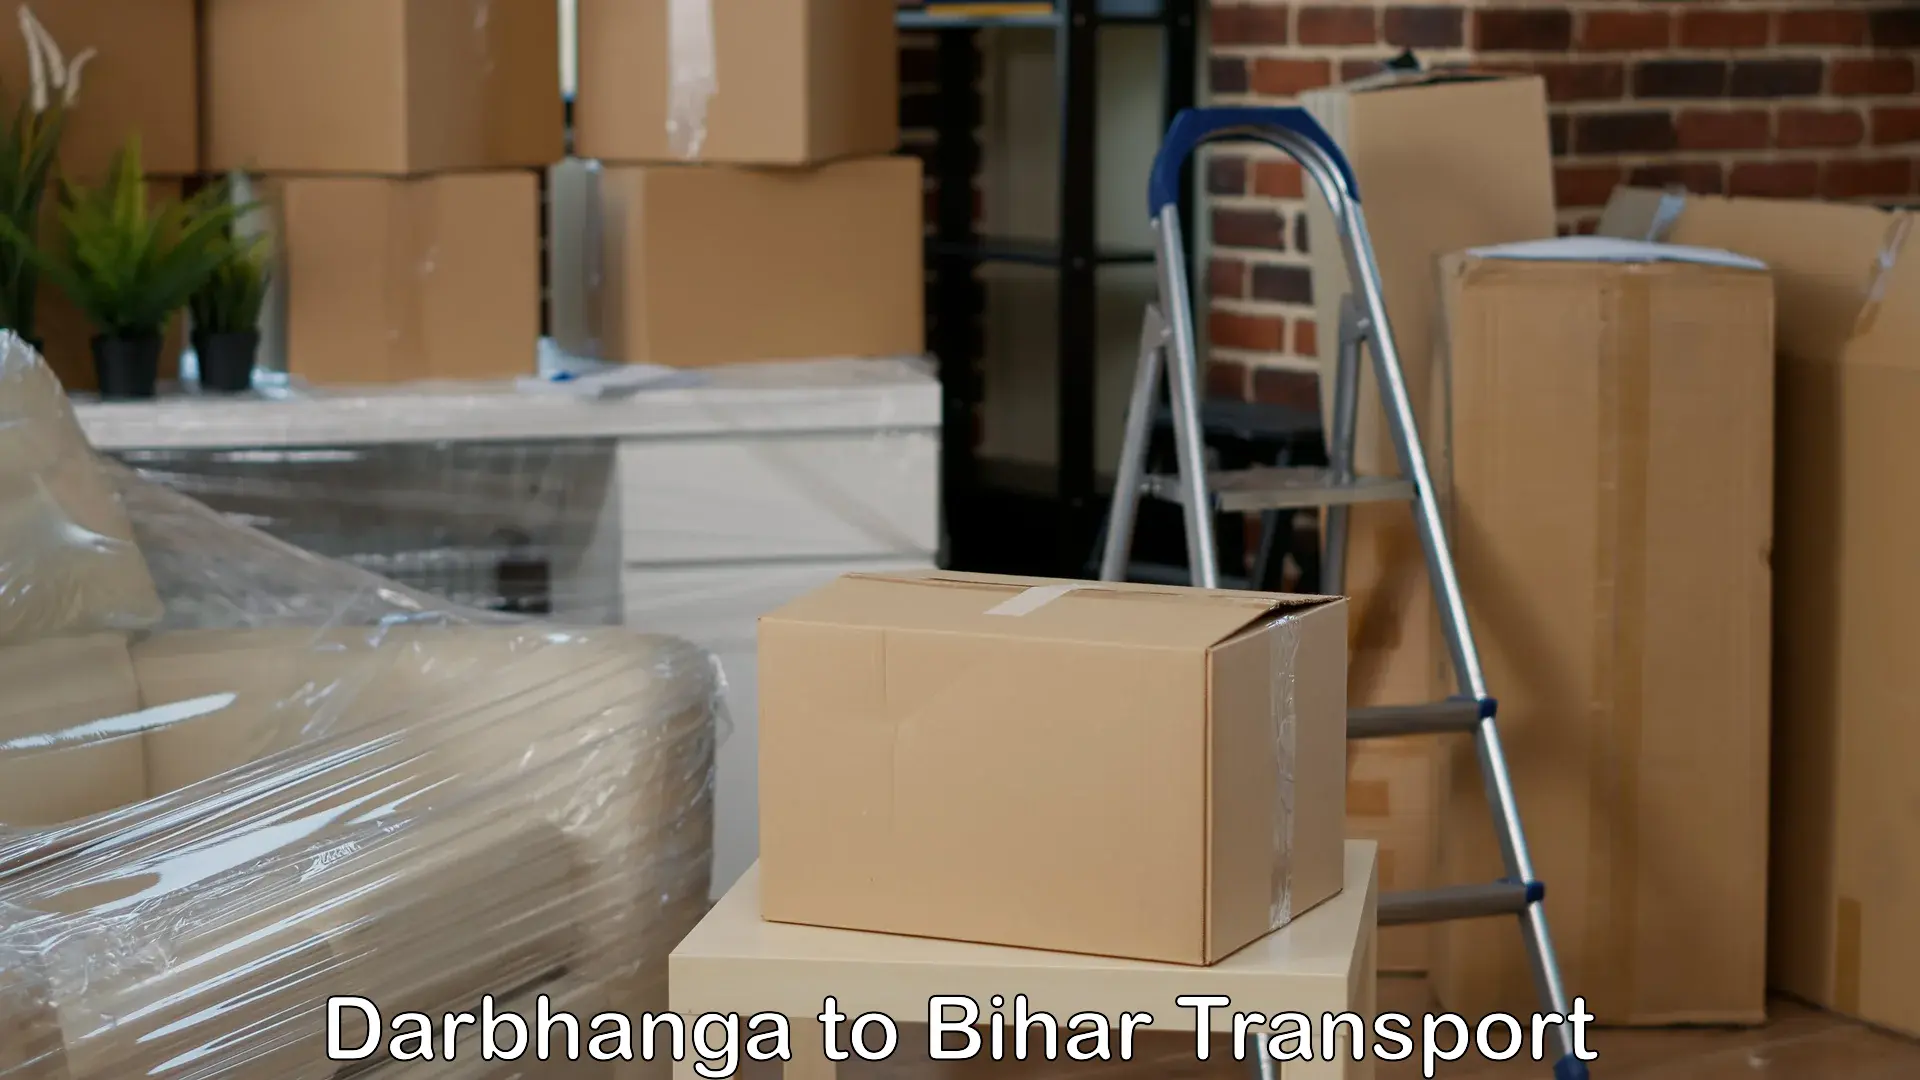 Shipping partner Darbhanga to Rohtas